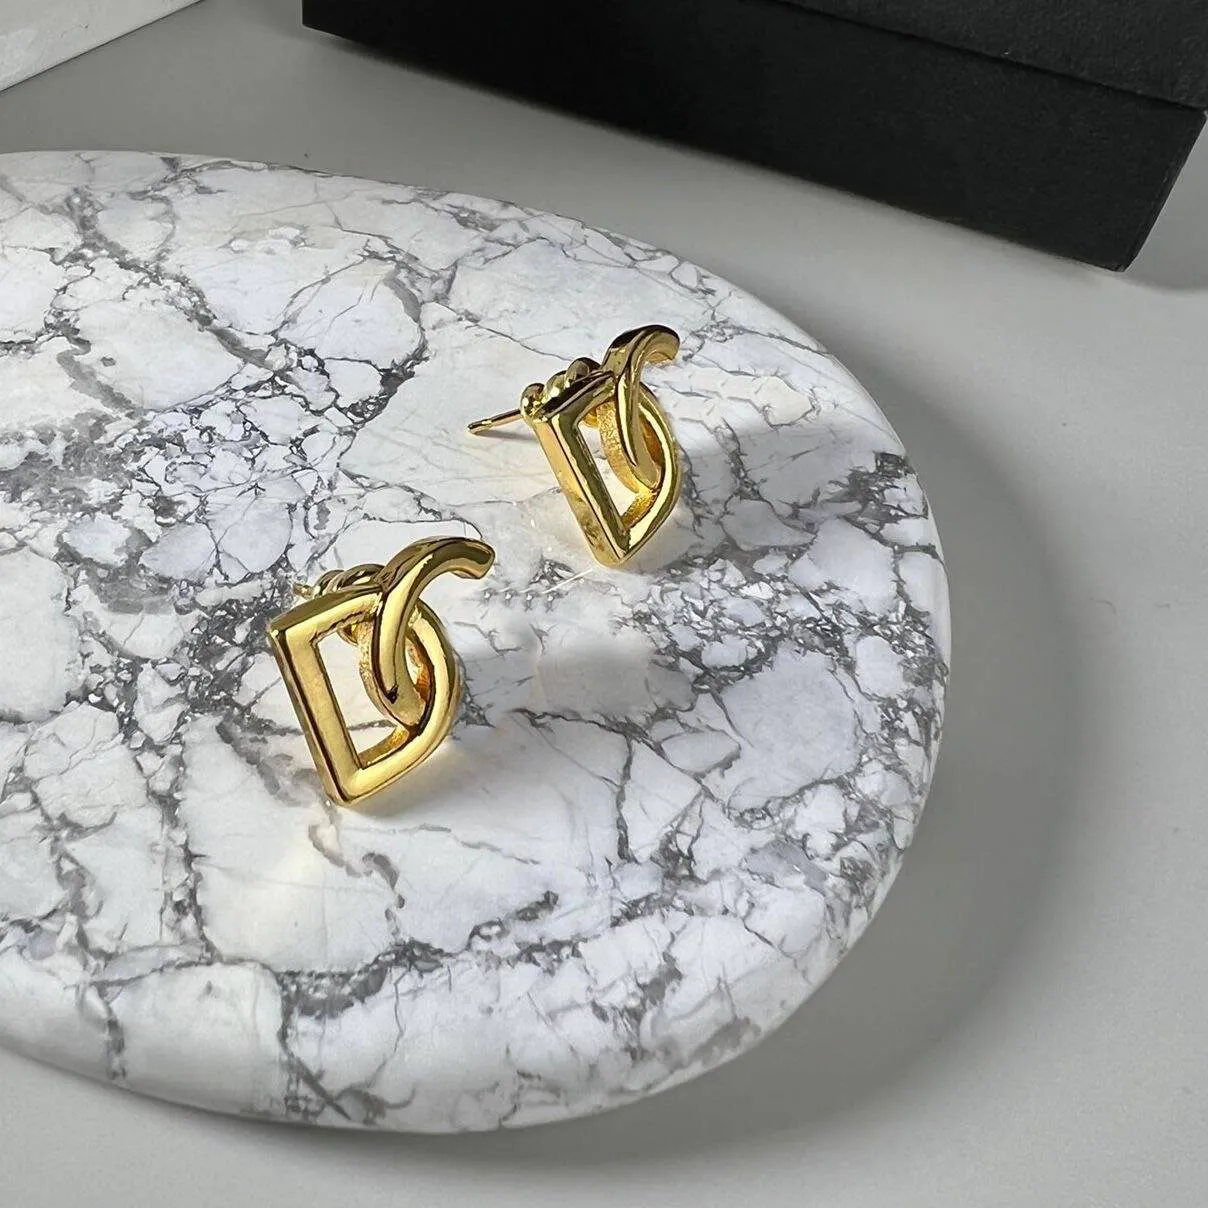 Gold stud earrings designer earrings Valentine's Day gifts for women designer jewelry